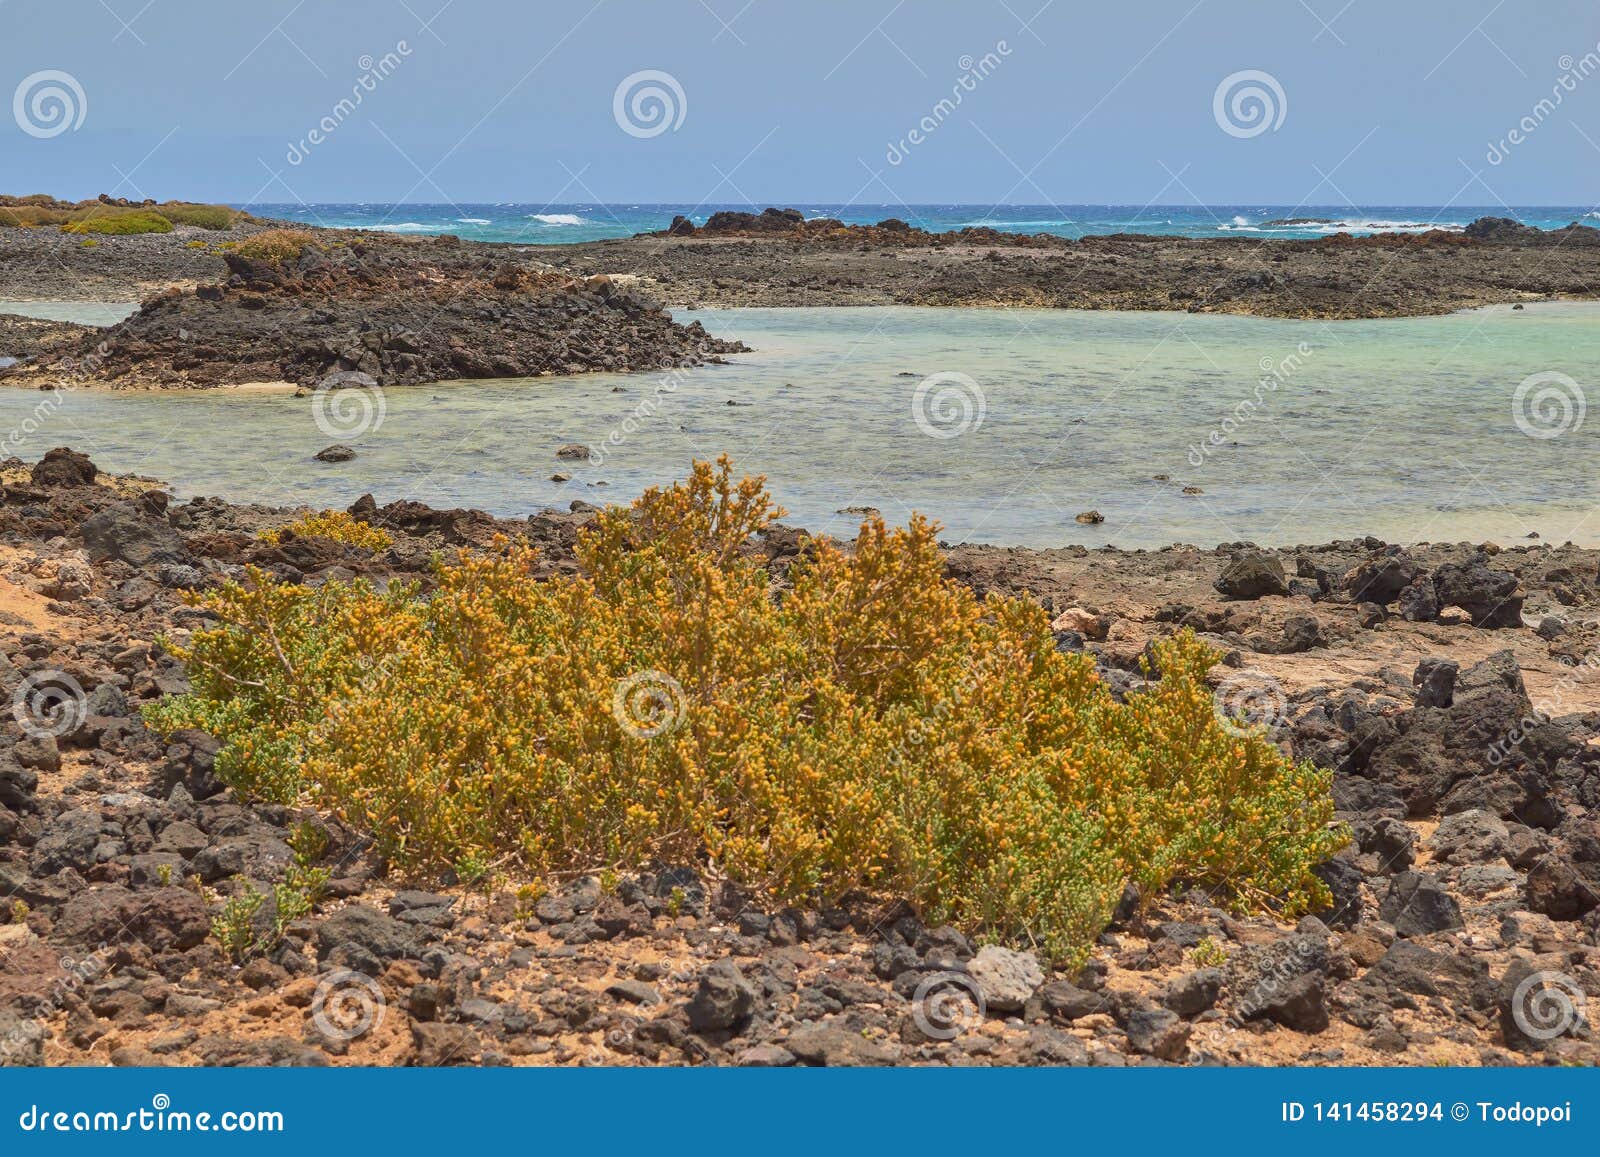 beautiful view of the sea of crystal clear water in isla de lobos, fuerteventura